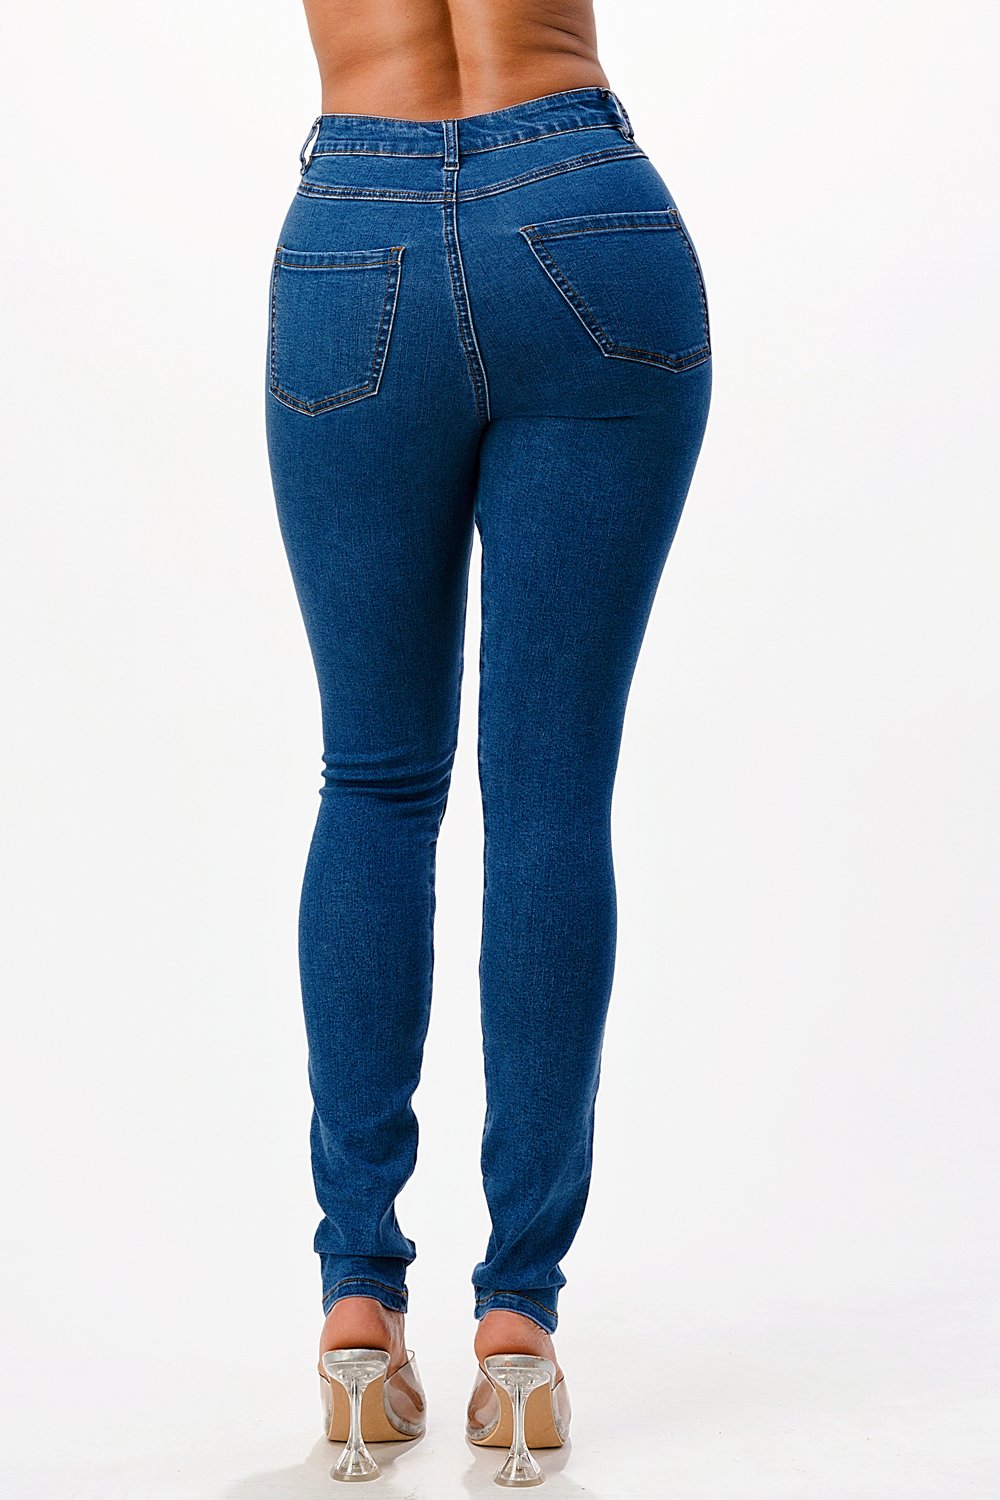 Purple Candy Jeans Women High Rise Skinny Fit Denim Pants (Medium Blue)